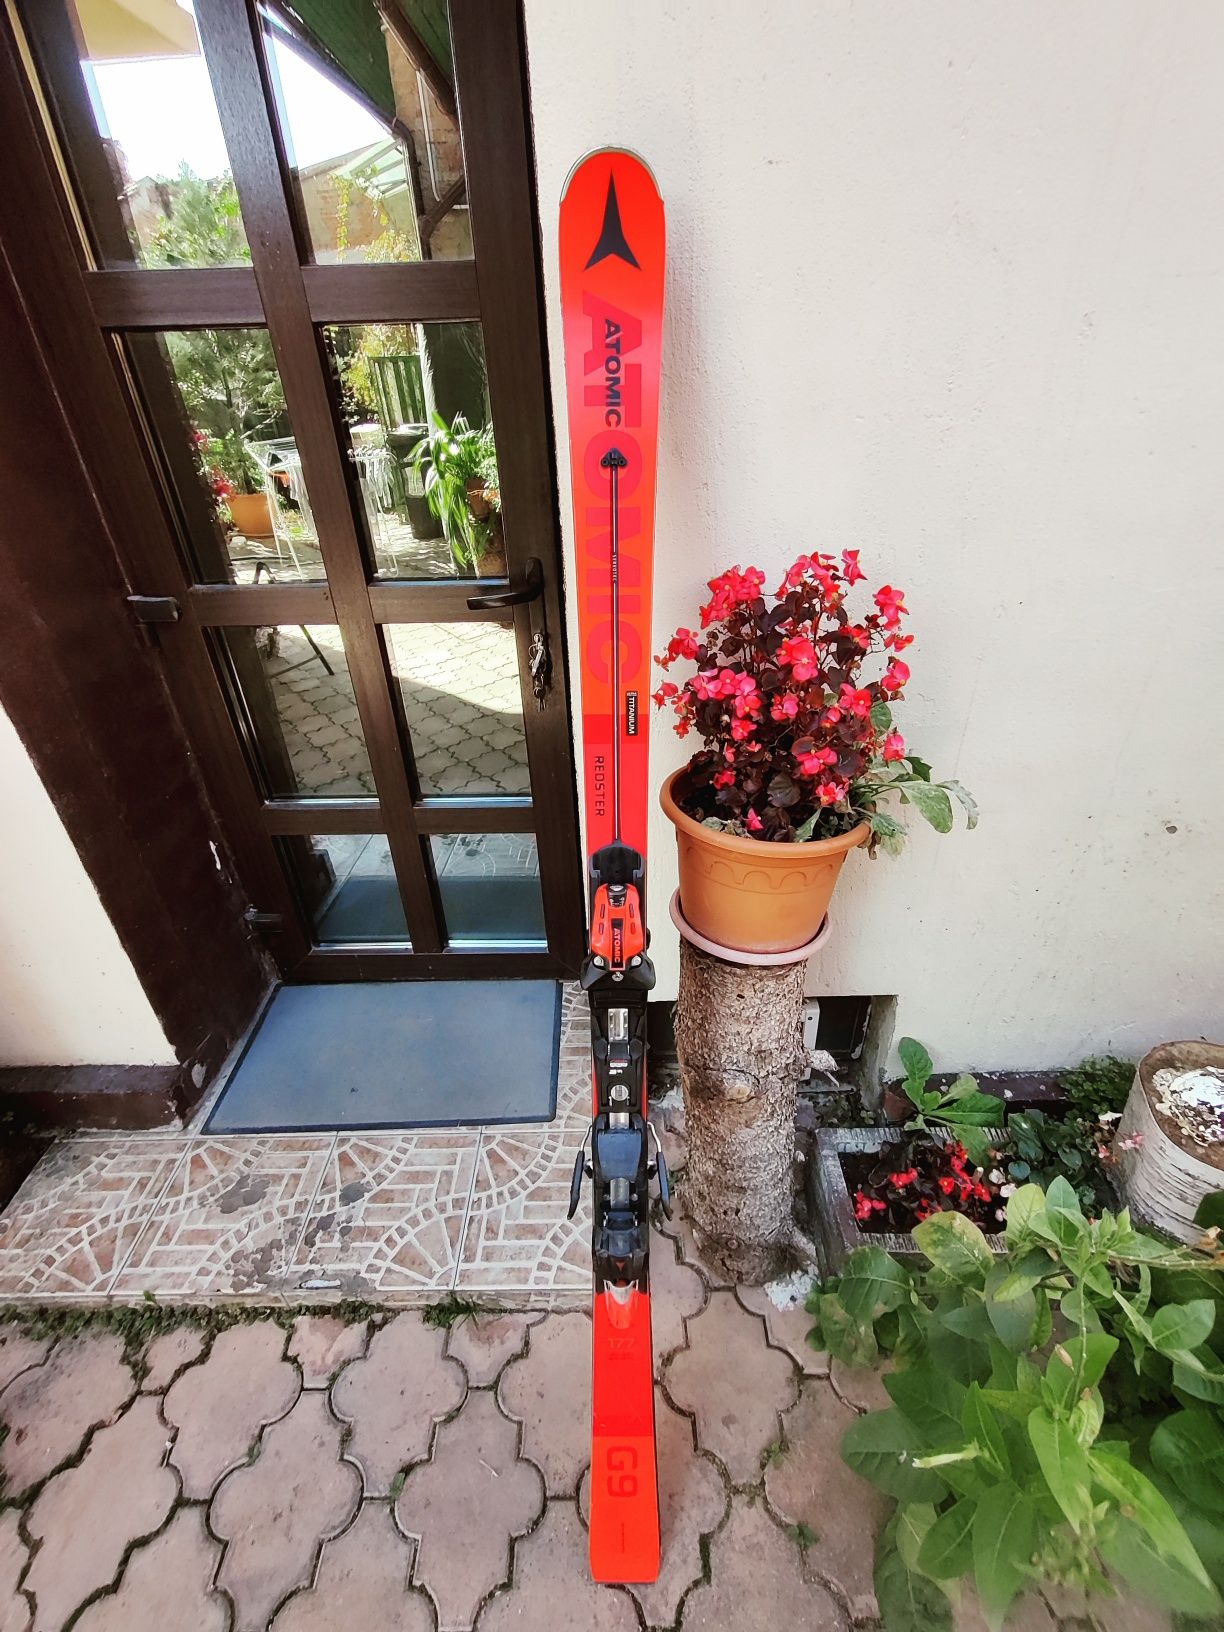 Skiuri atomic G9, 1,77 model 2019 REDSTER, legături Atomic Originale